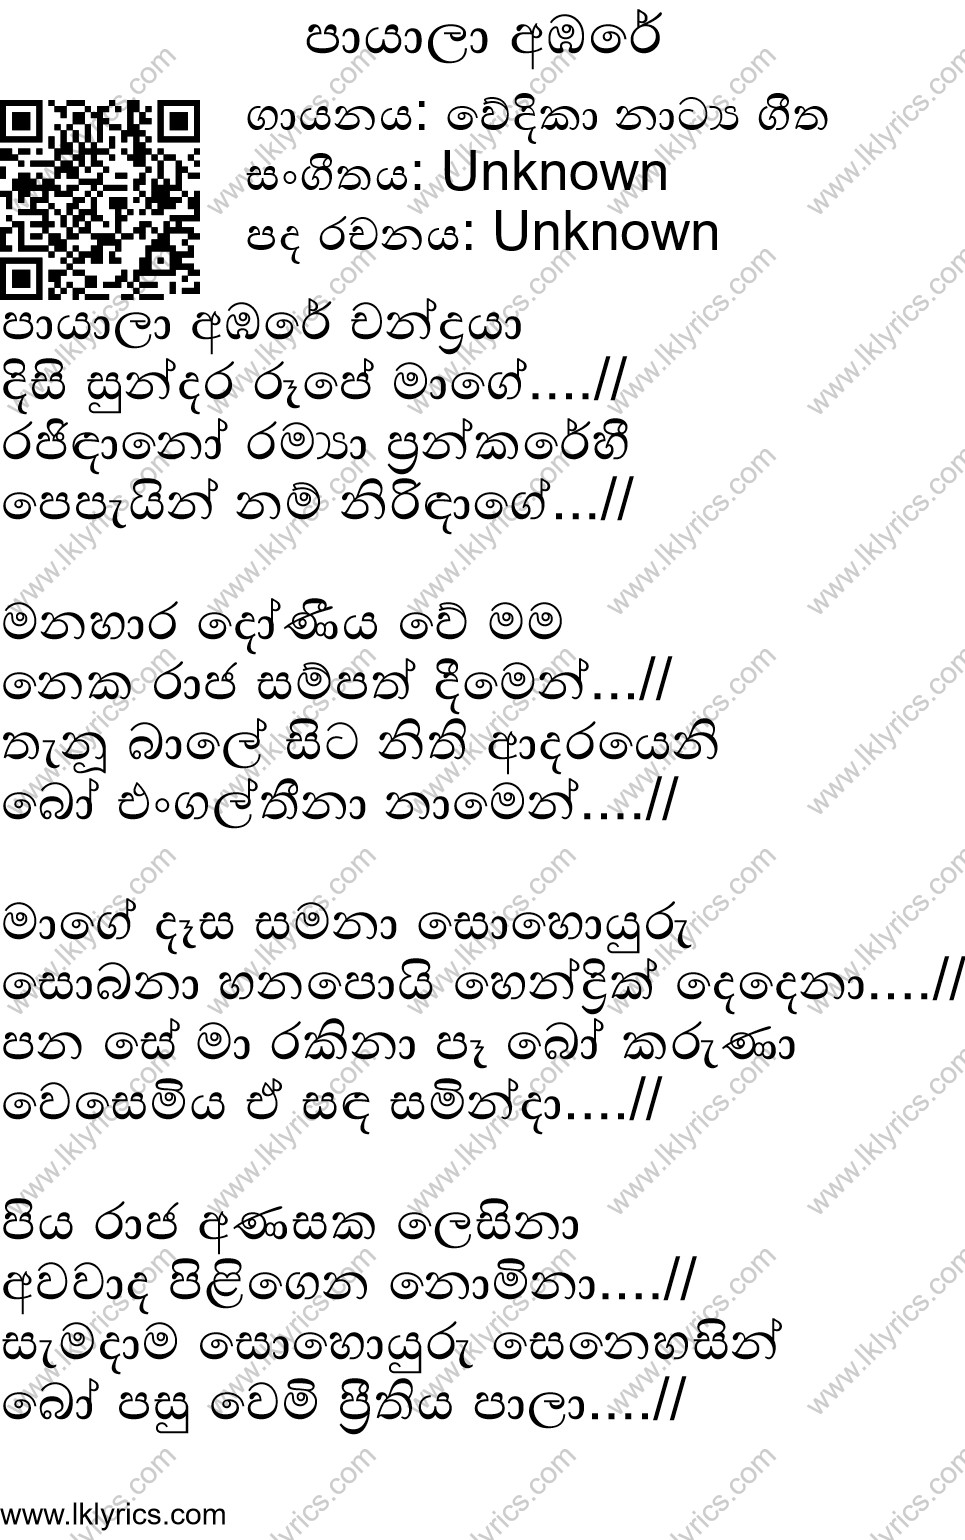 Payala Ambare Balasanna Lyrics Lk Lyrics payala ambare balasanna lyrics lk